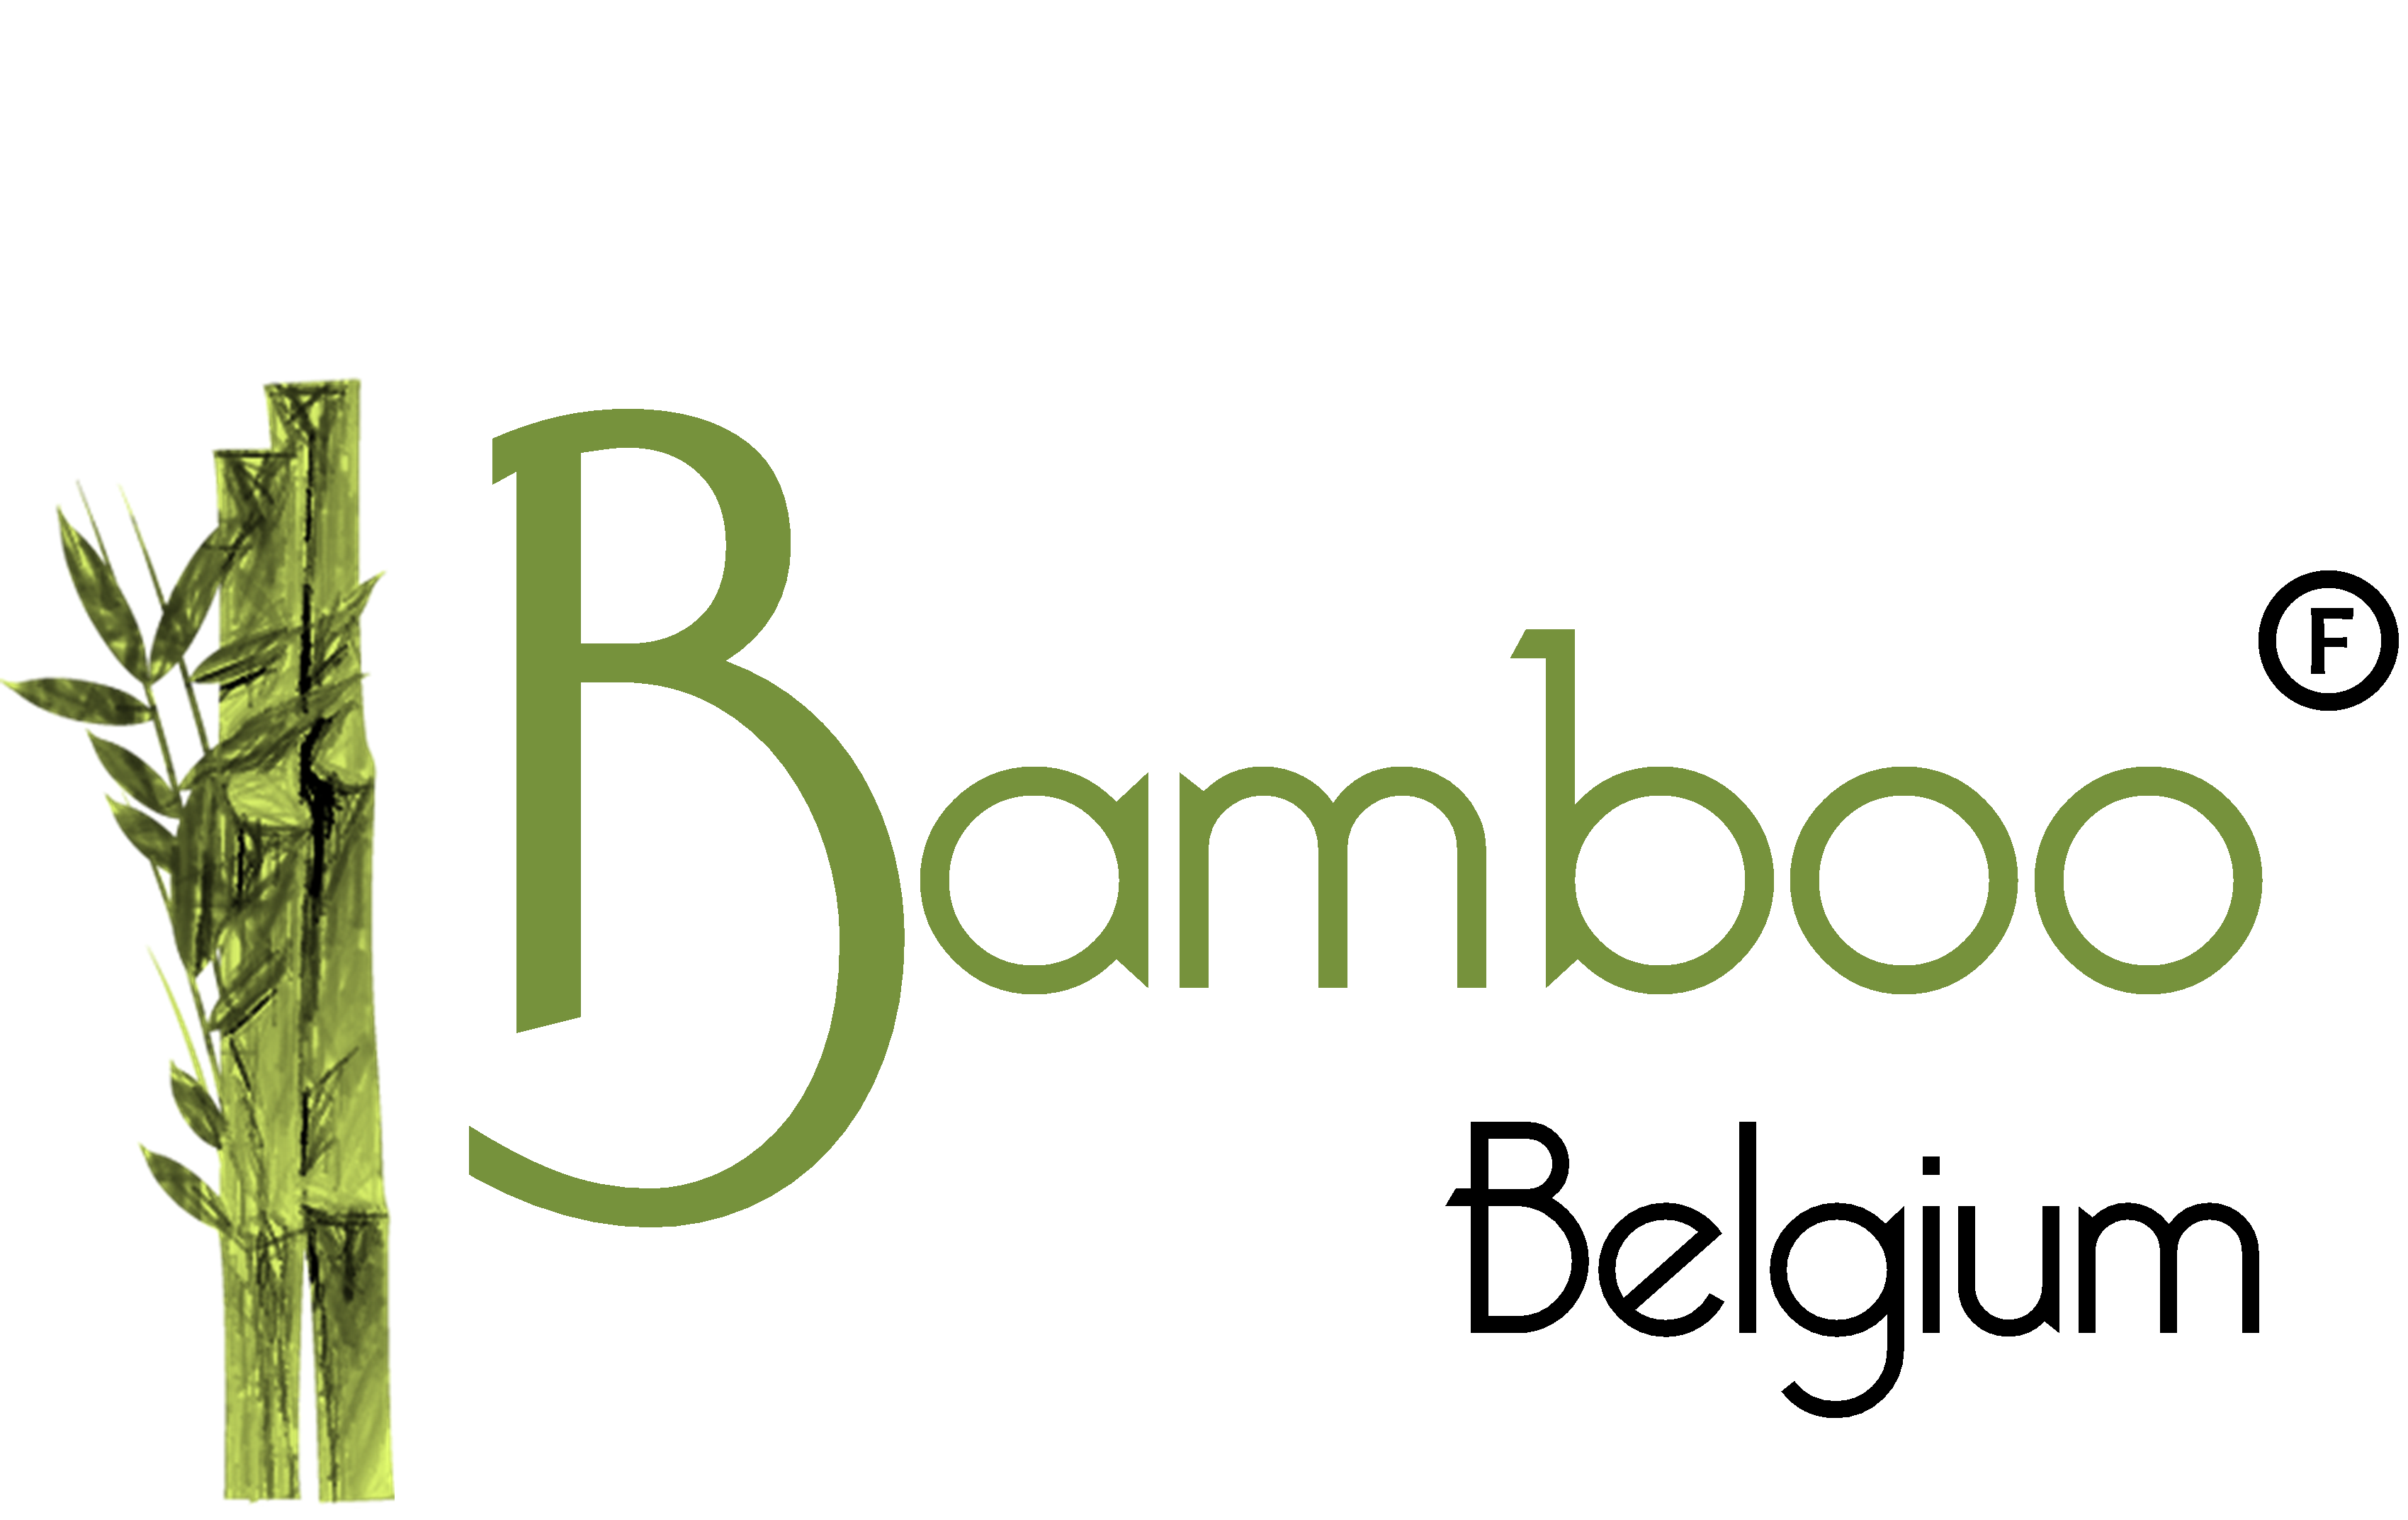 Bamboo Belgium